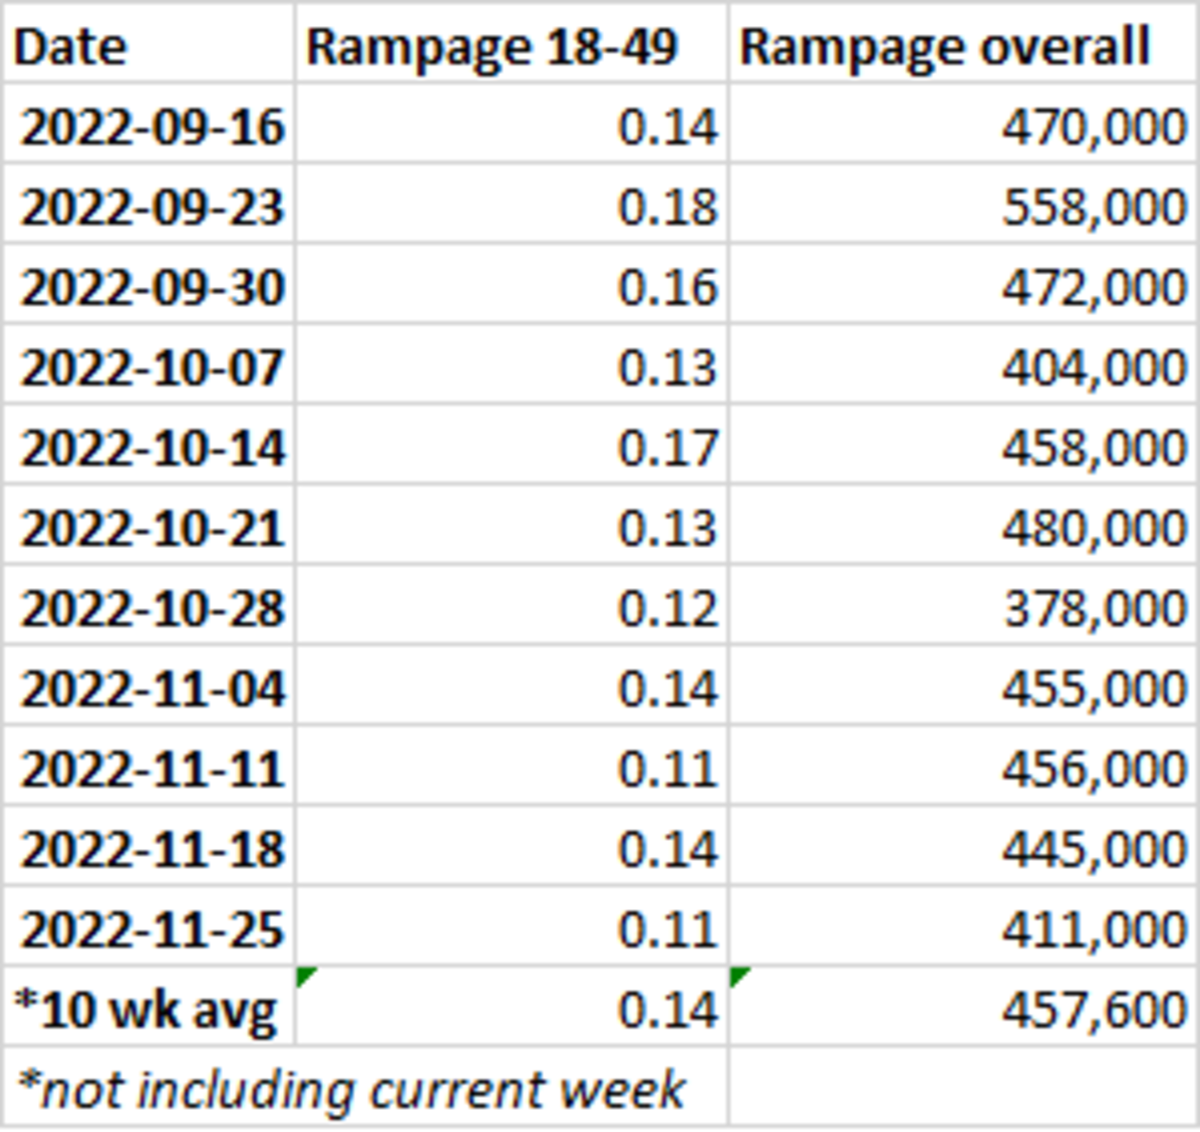 Rampage ratings